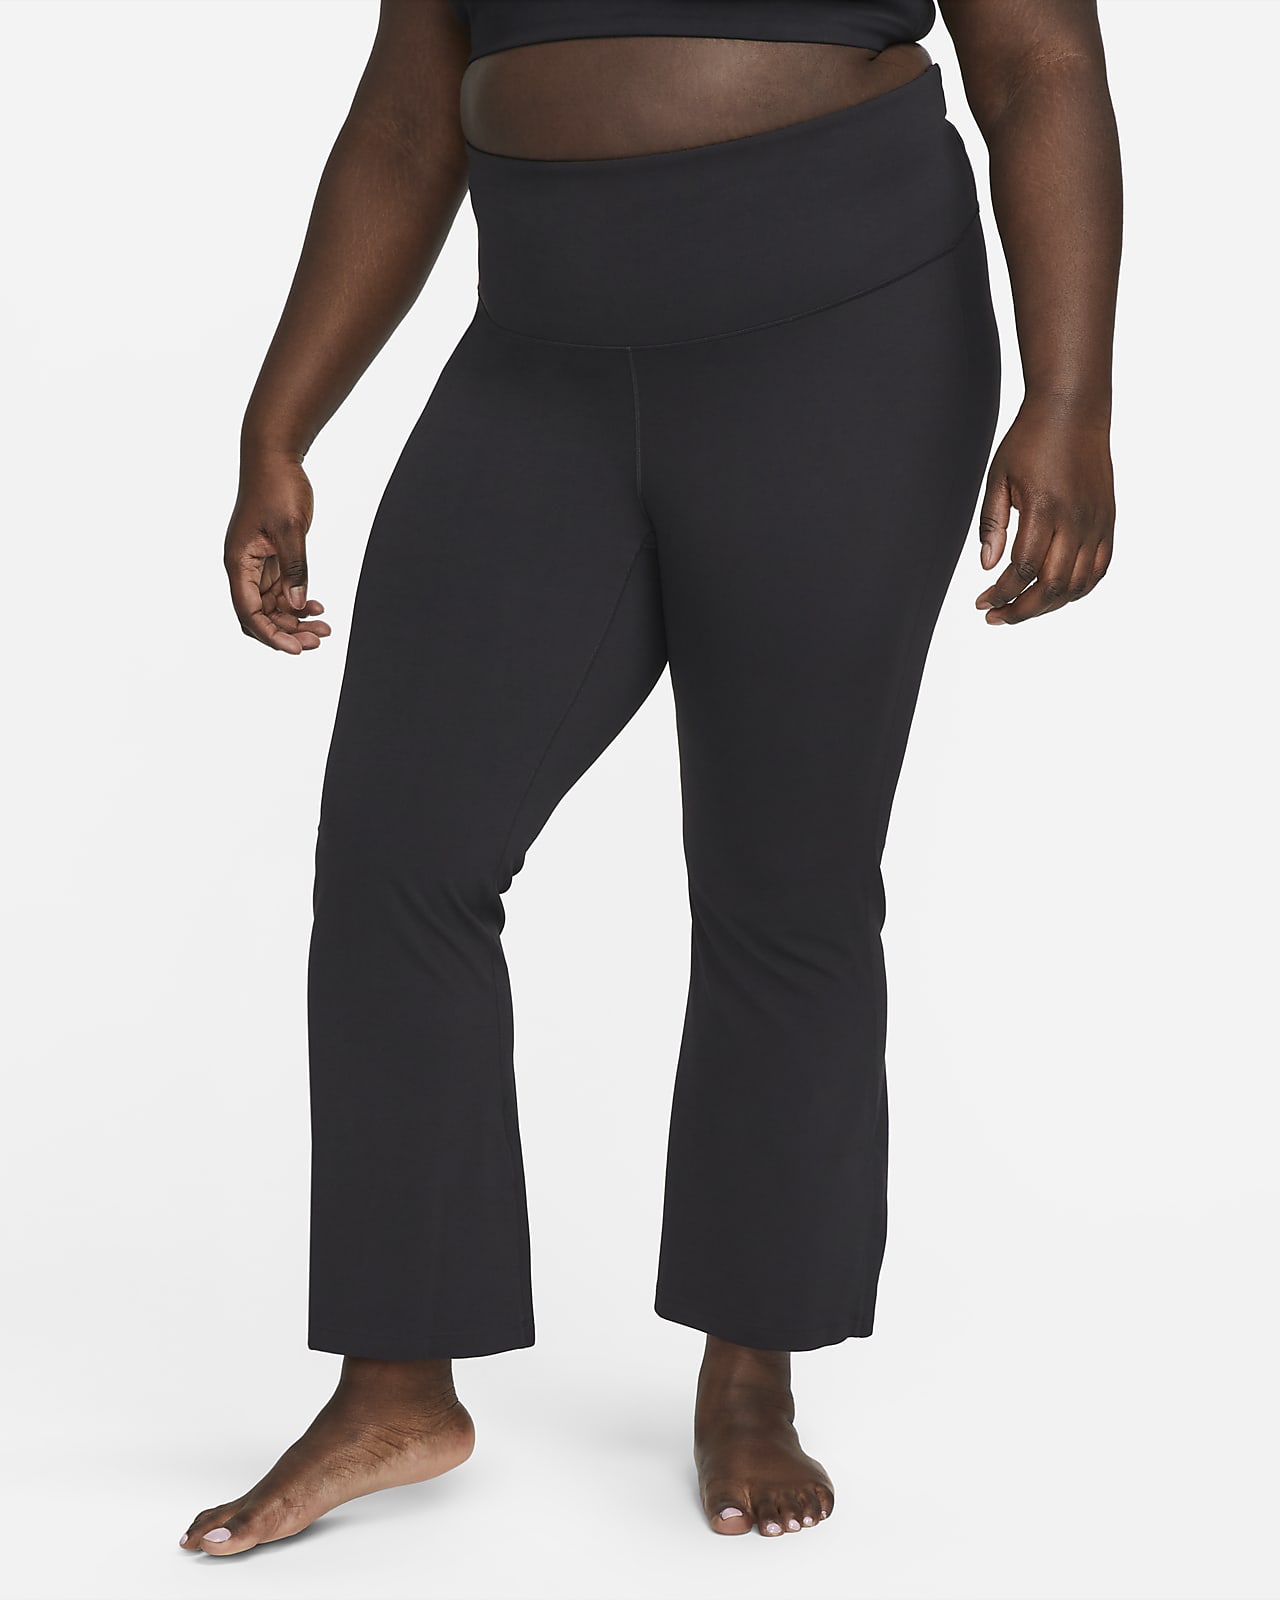 Pants acampanados para mujer (talla grande) Nike Yoga Dri-FIT Luxe